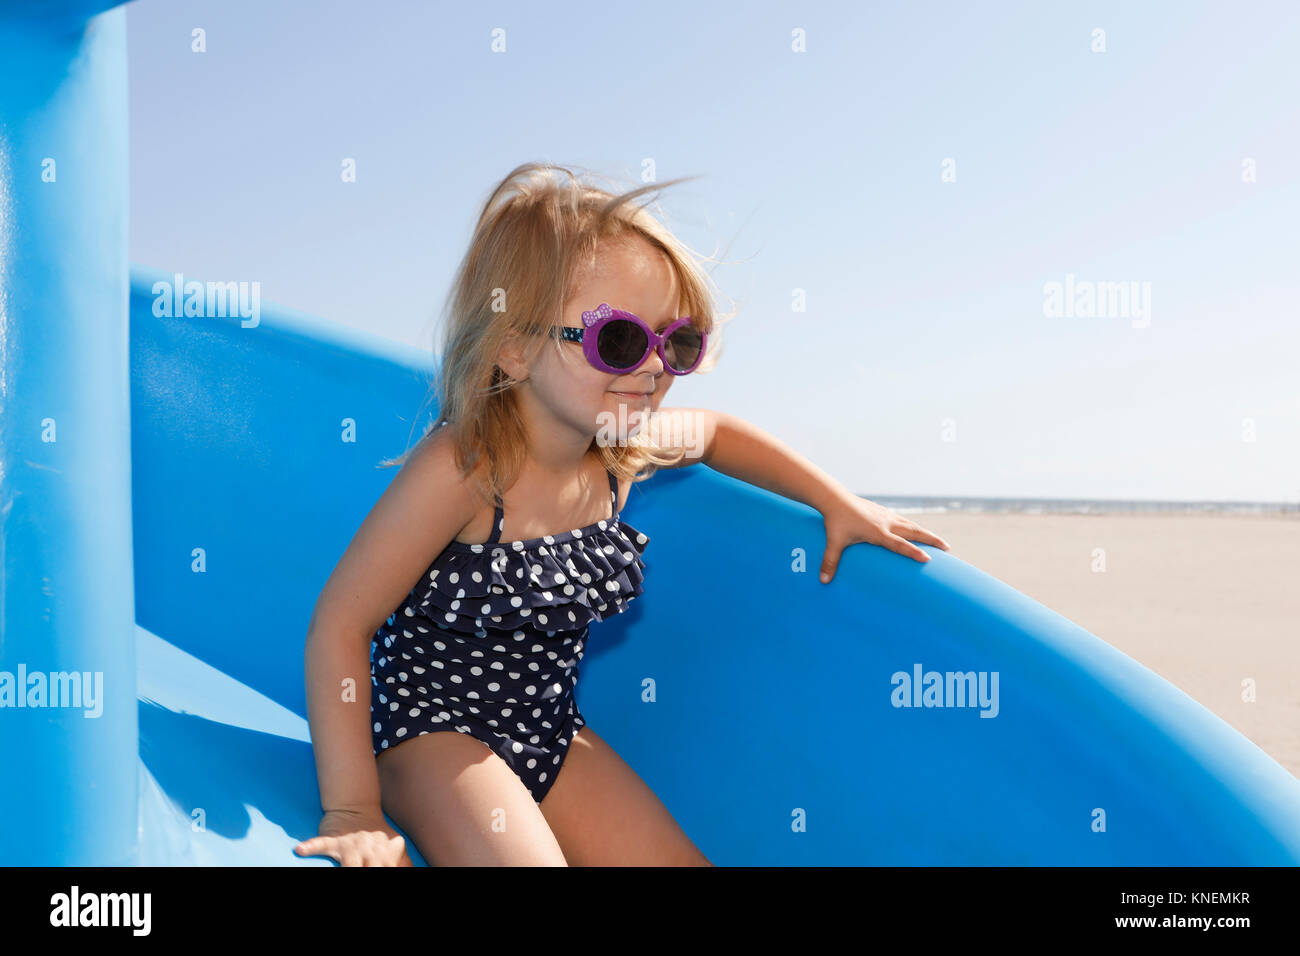 Girl on slide wearing swimming costume and sunglasses Stock Photo